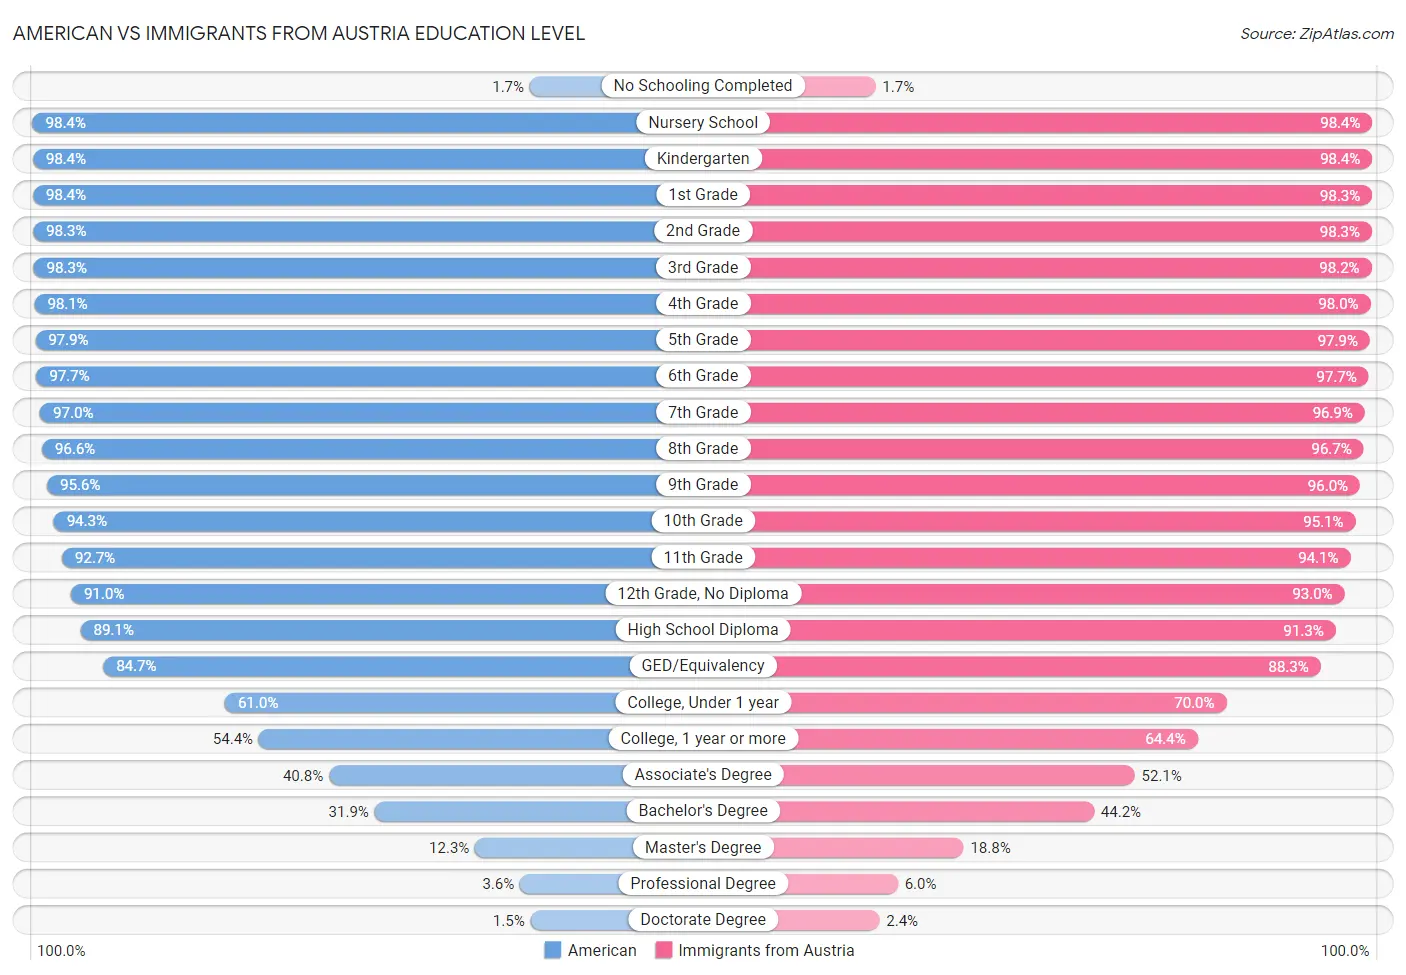 American vs Immigrants from Austria Education Level